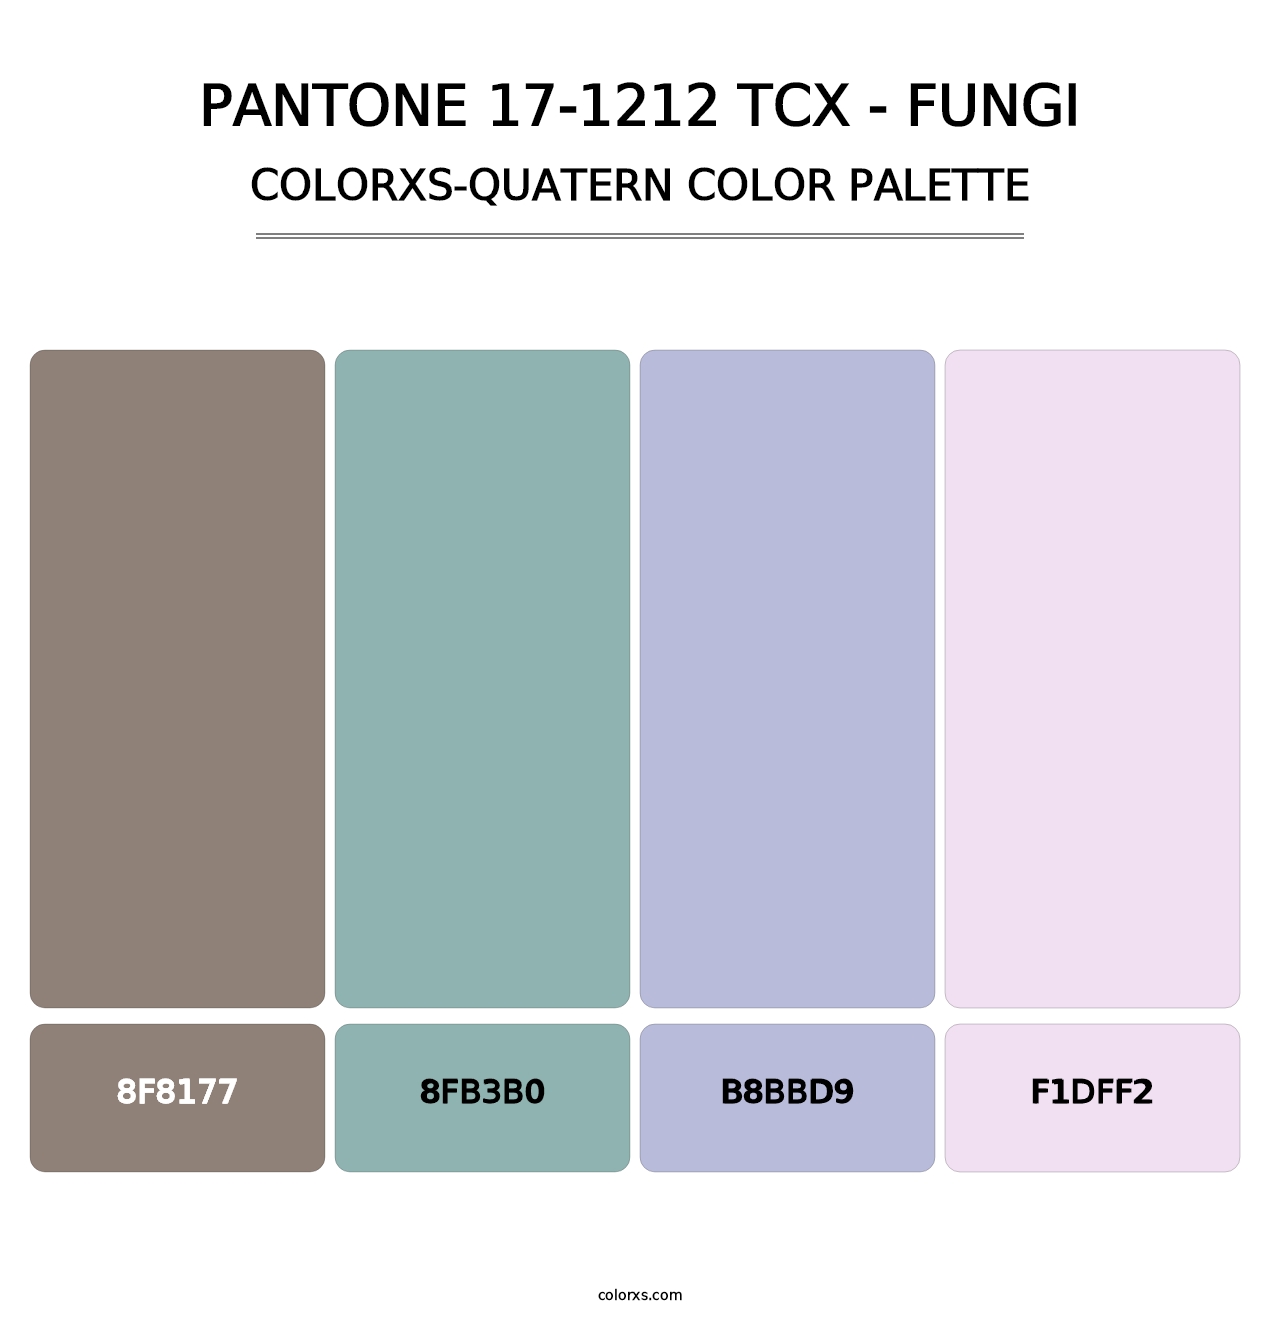 PANTONE 17-1212 TCX - Fungi - Colorxs Quatern Palette